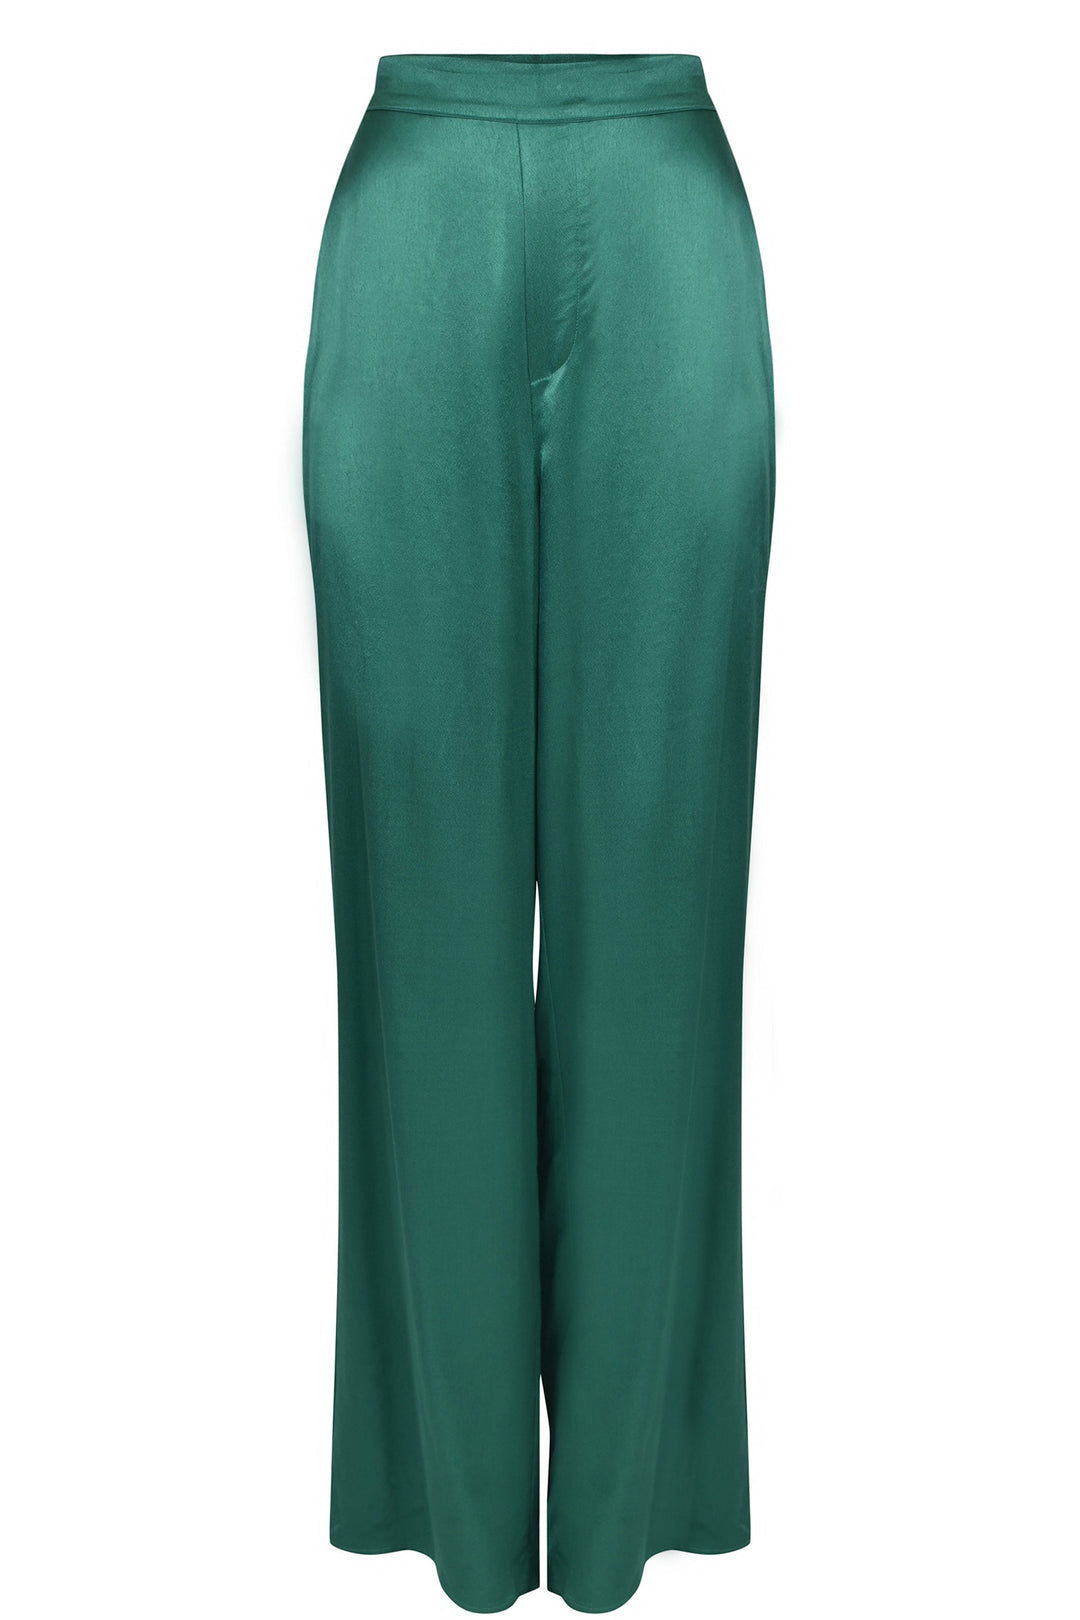 Husk SIENNA PANT - Emerald